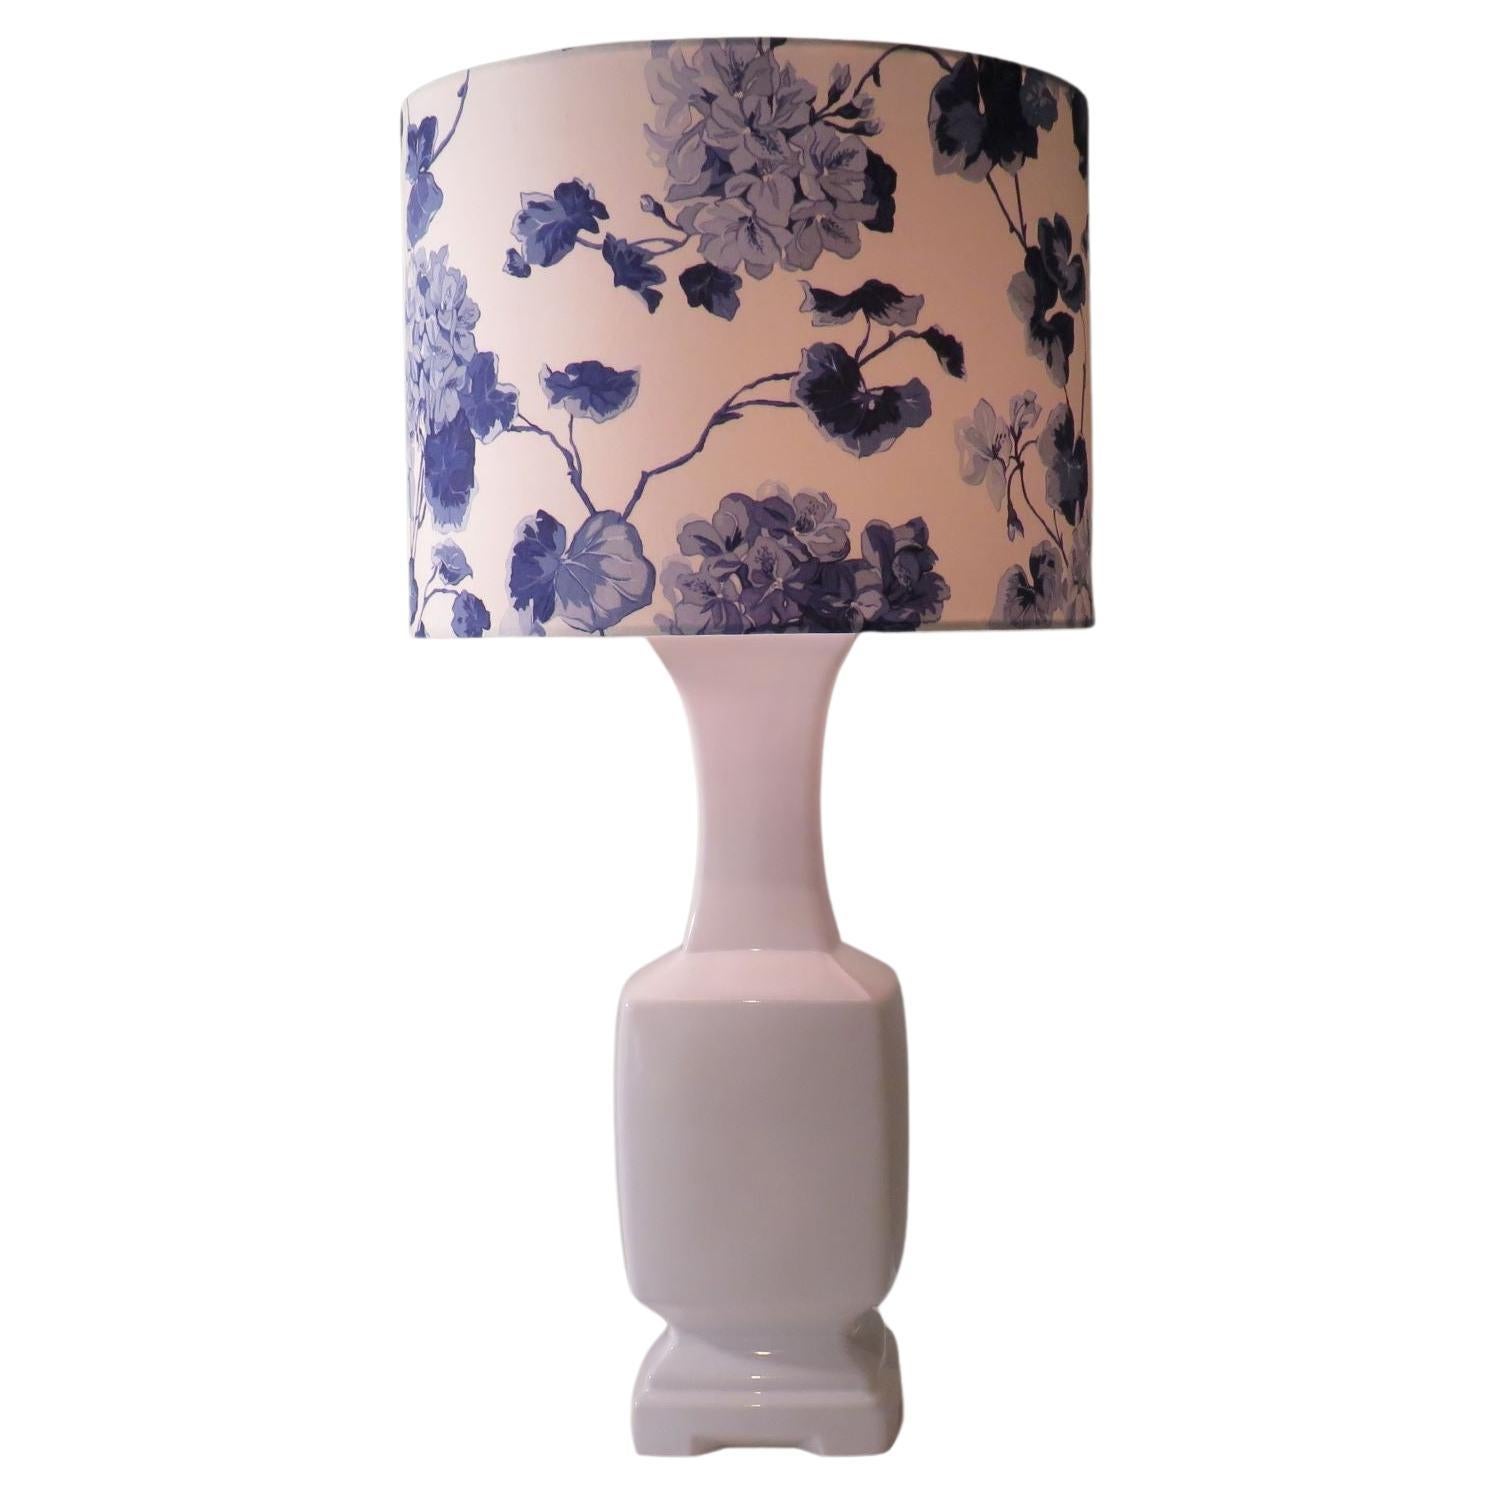 Midcentury White Ceramic Table Lamp with New, Professionally Handmade Lampshade